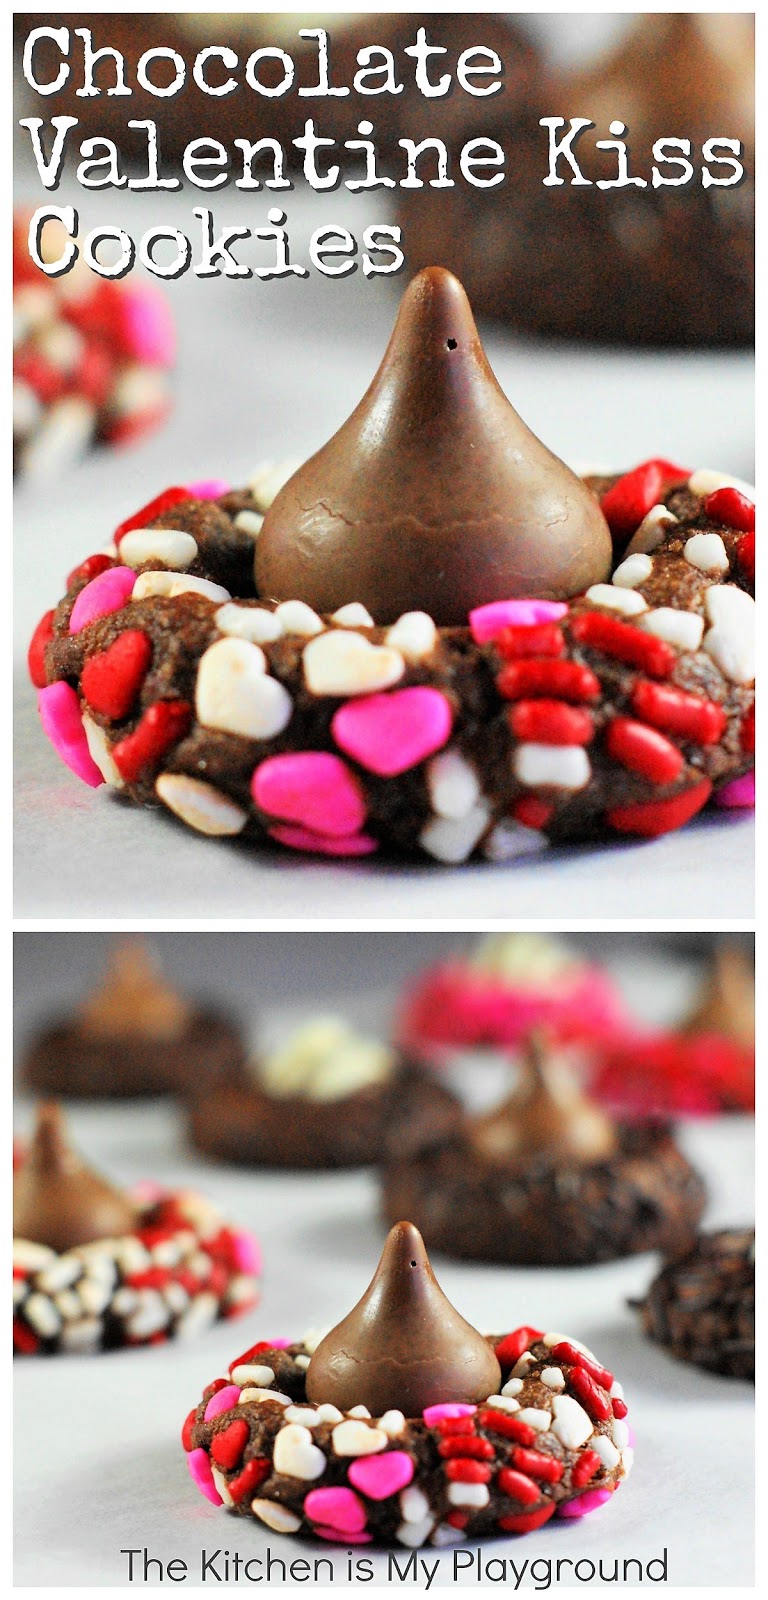 Chocolate Valentine Kiss Cookies | The Kitchen is My Playground